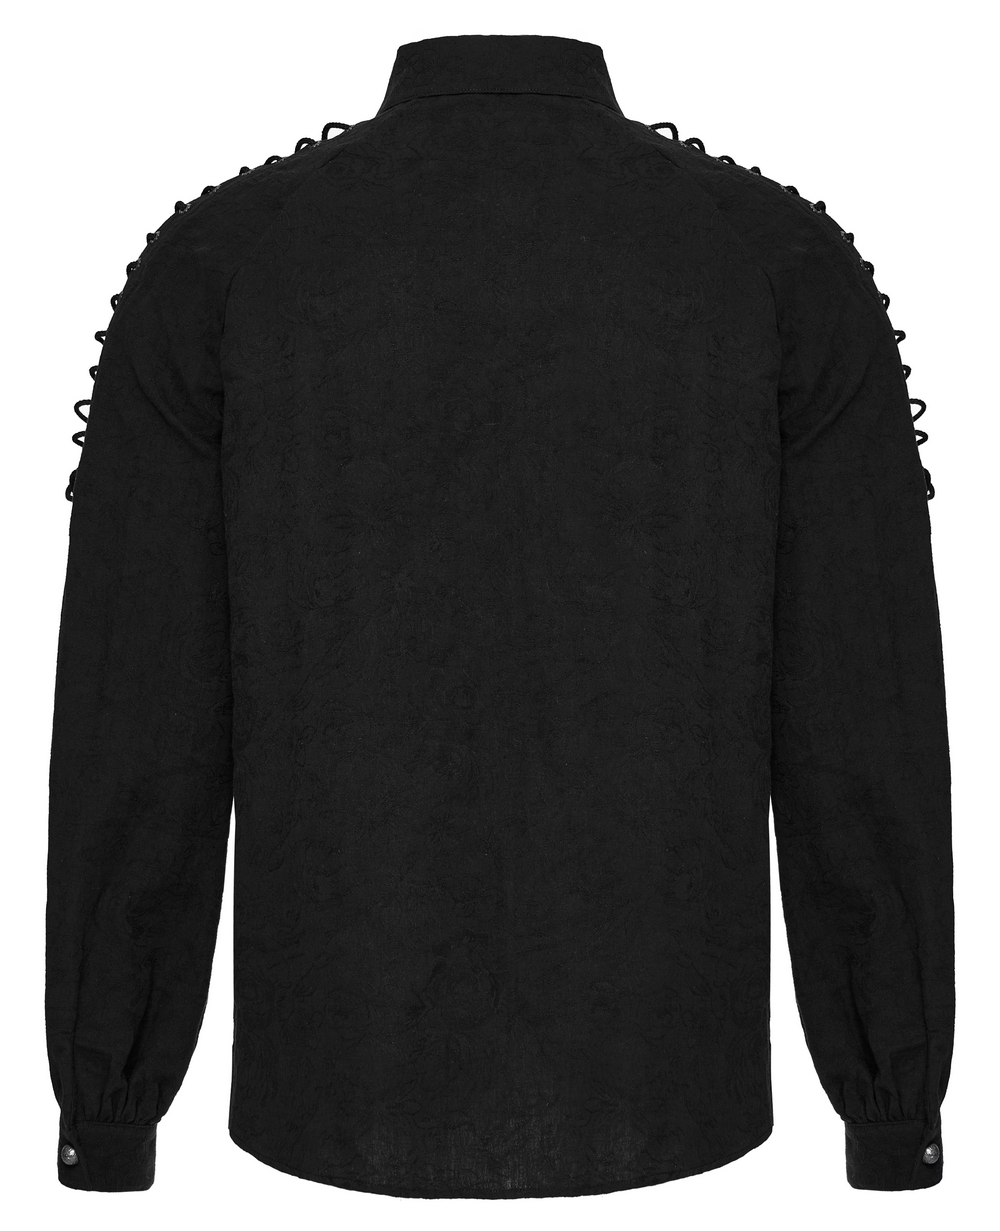 Vintage Black Lace-Up Gothic Shirt for Men - HARD'N'HEAVY